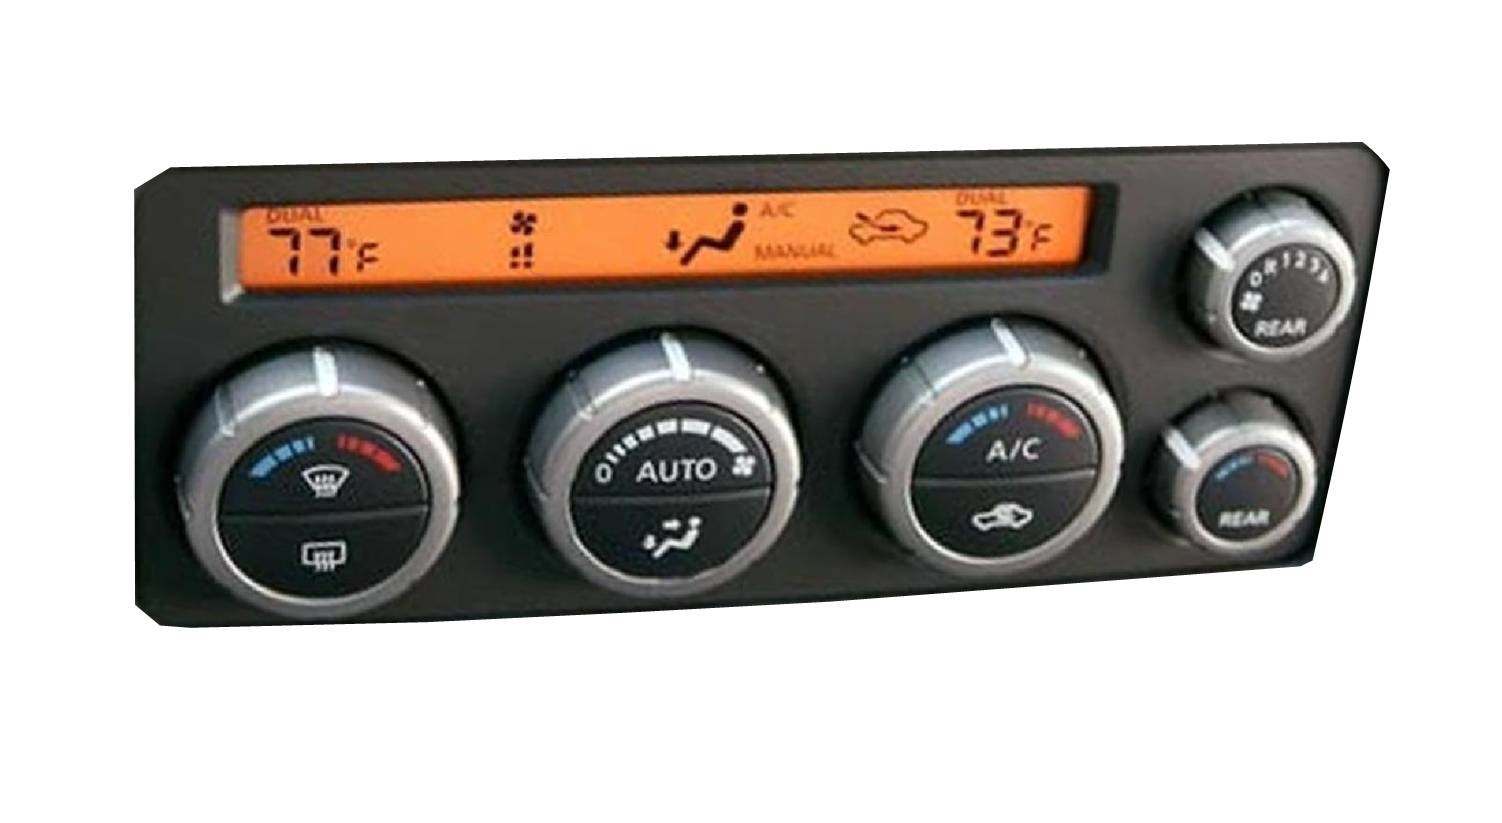 Nissan Pathfinder (2005-2010) Climate Control Repair